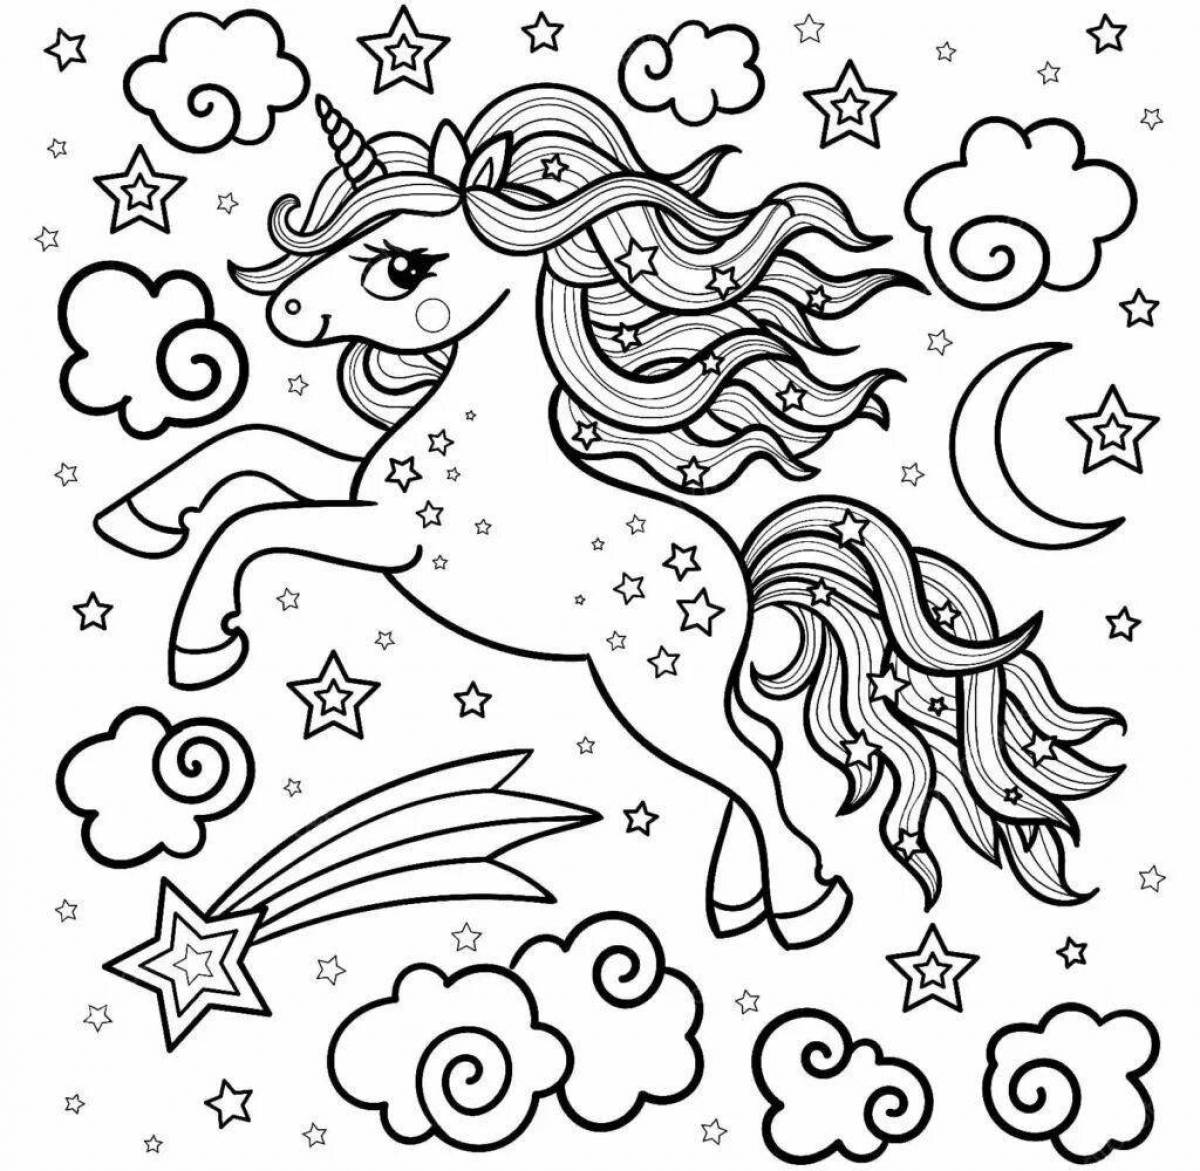 Dreamy unicorn coloring book for kids 4 5